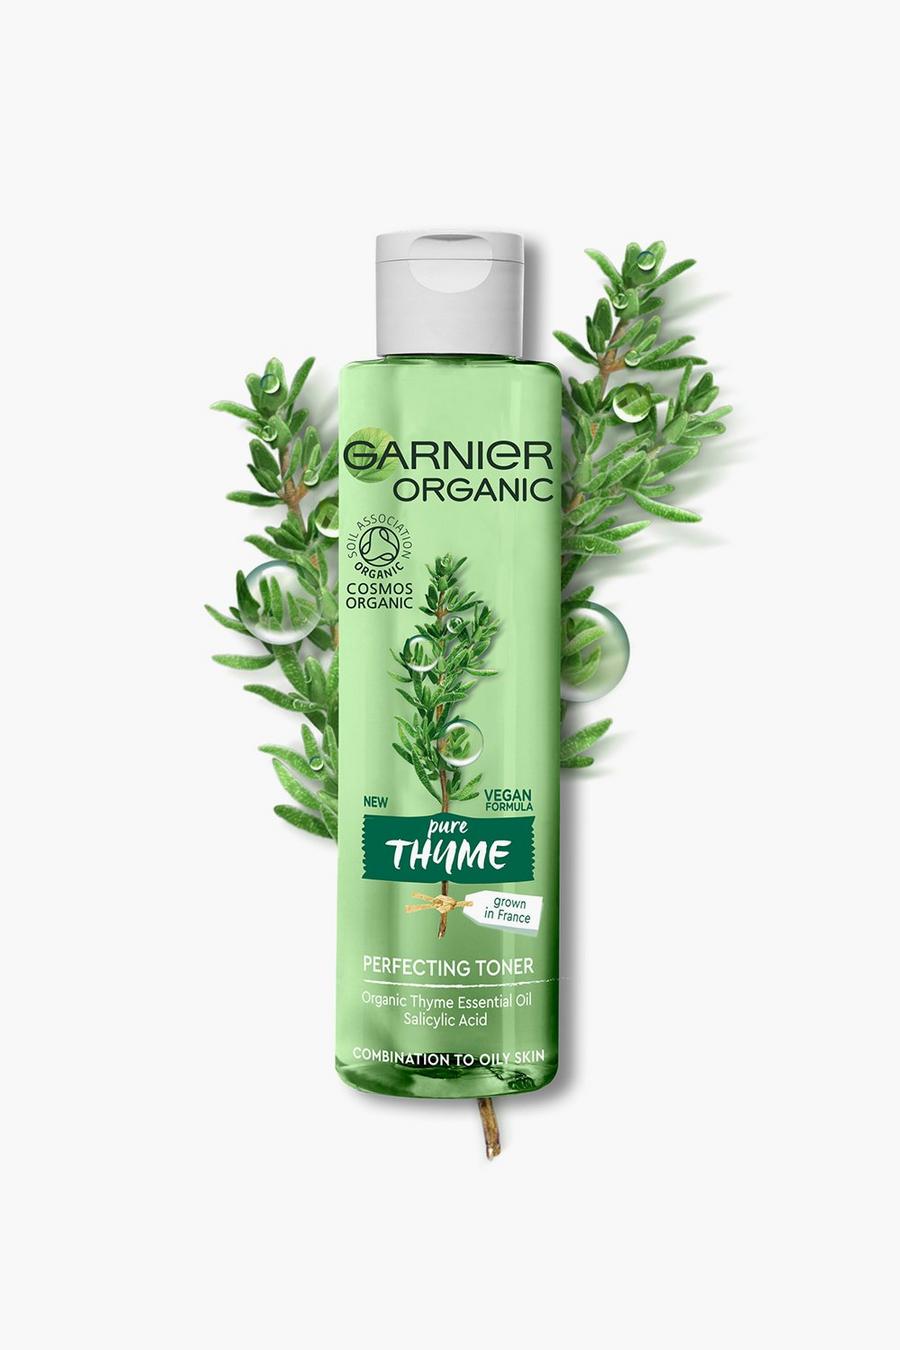 Green vert Garnier Organic Thyme Perfecting Toner 150ml